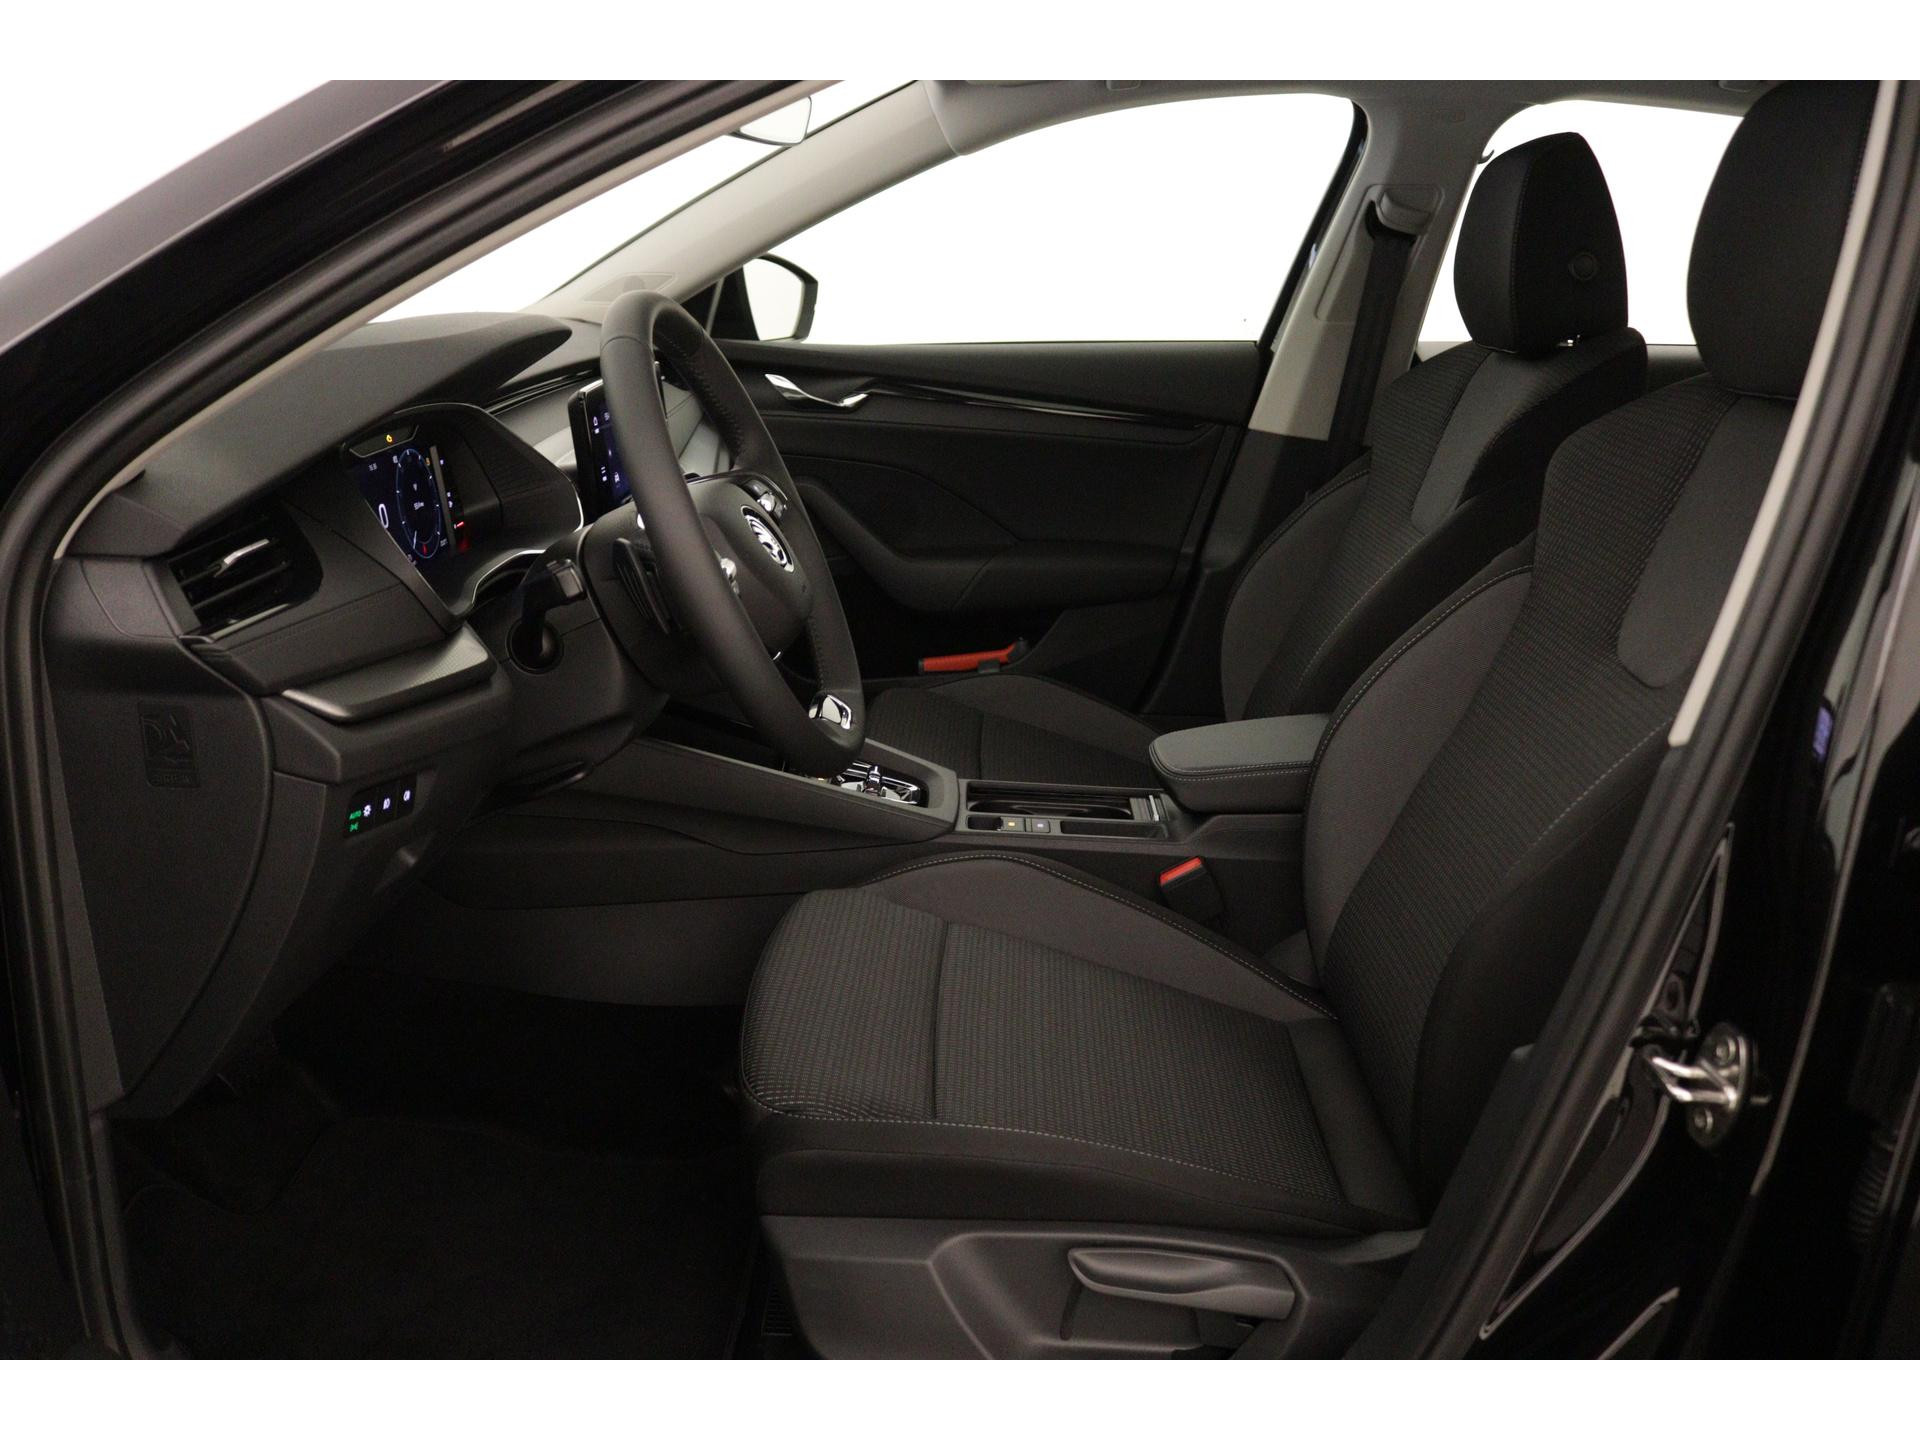 Škoda - Octavia Hatchback 1.0 TSI e-TEC 110 7DSG Ambition - 2023